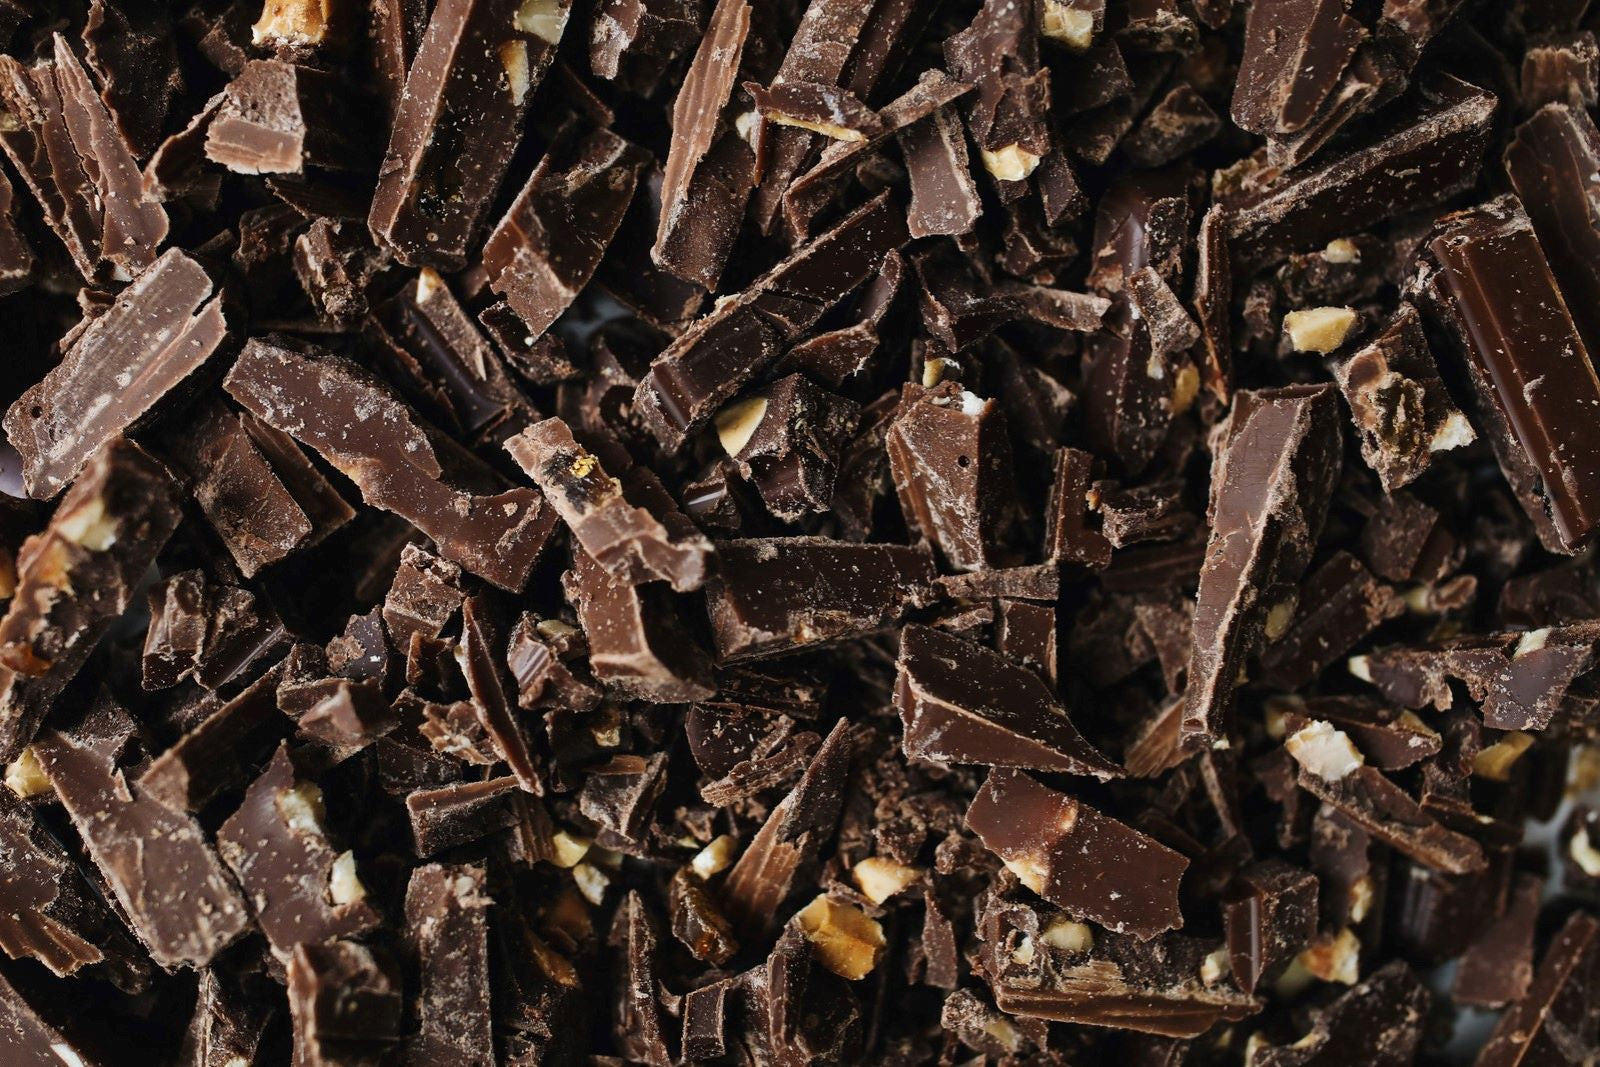 Dark Chocolate Dark Balsamic Vinegar